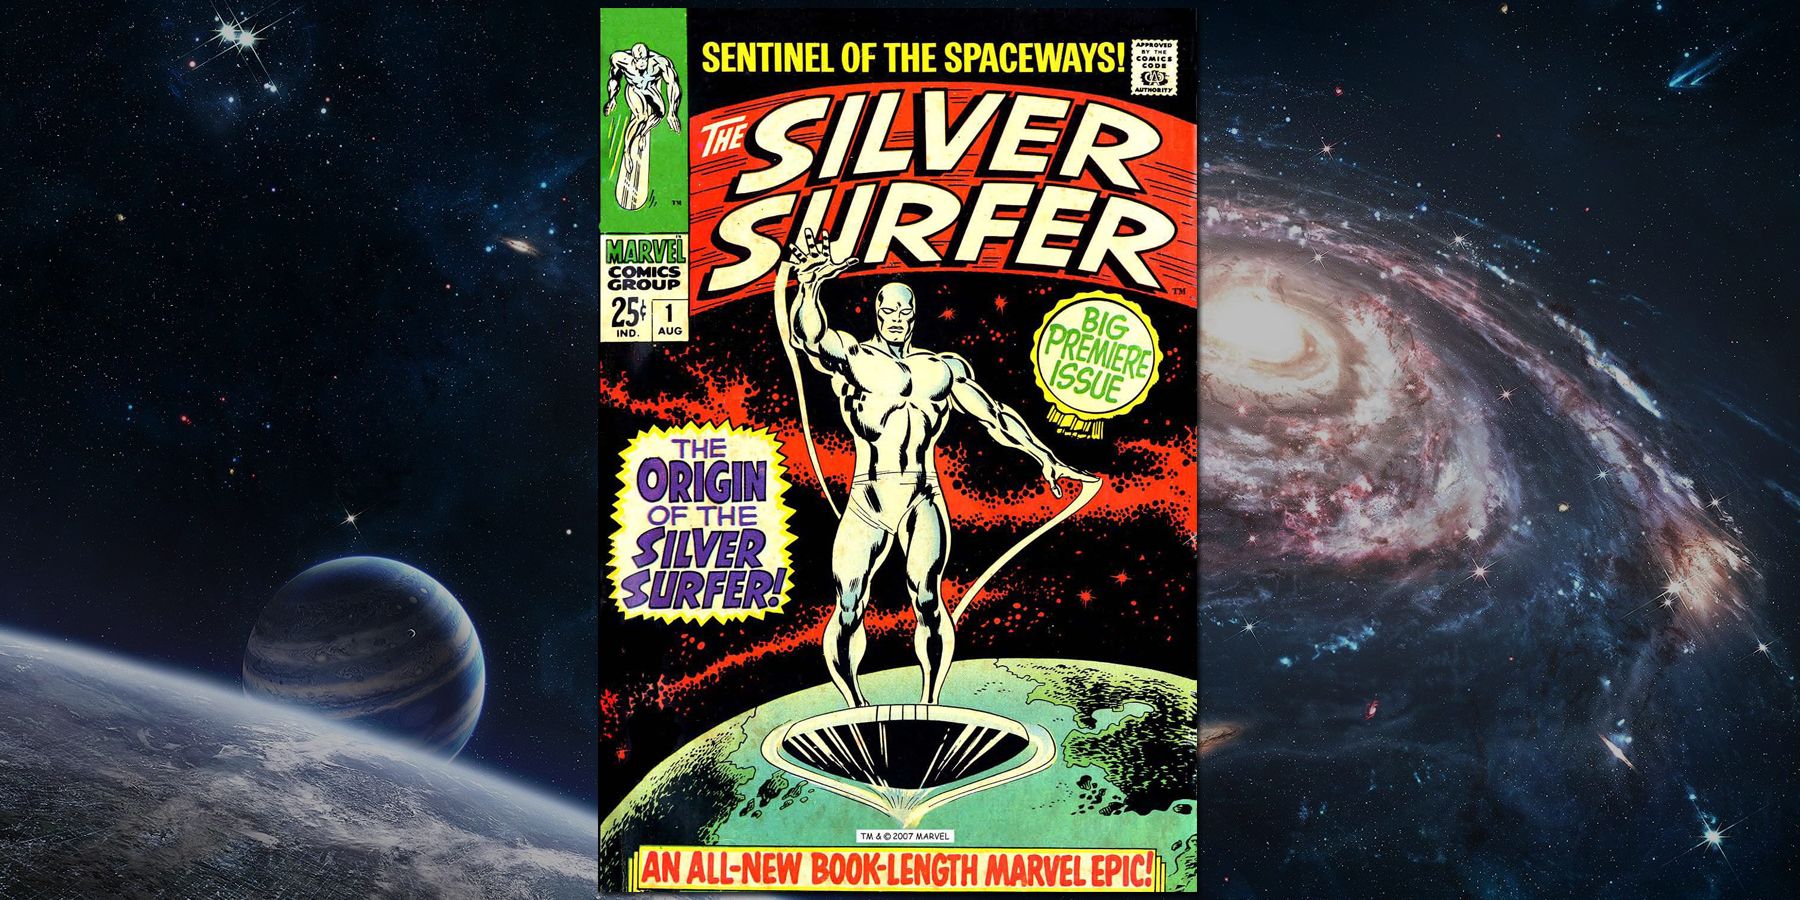 The Silver Surfer Vol.1968 #01